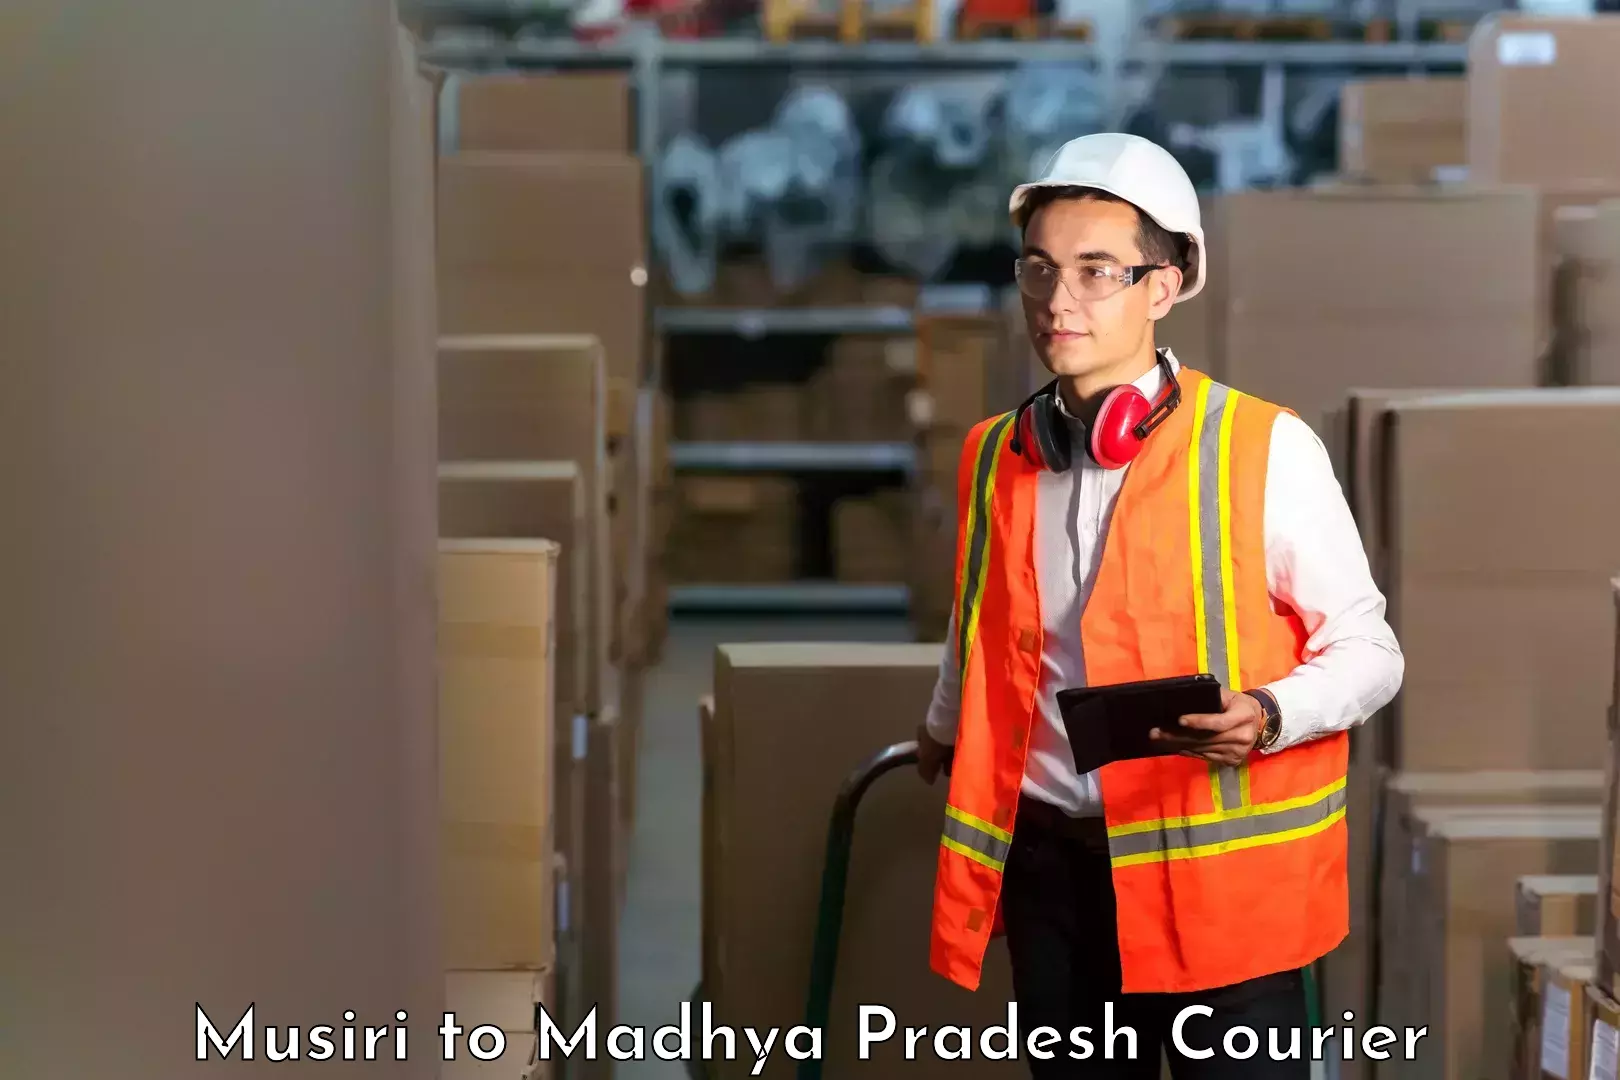 Cash on delivery service Musiri to Madhya Pradesh